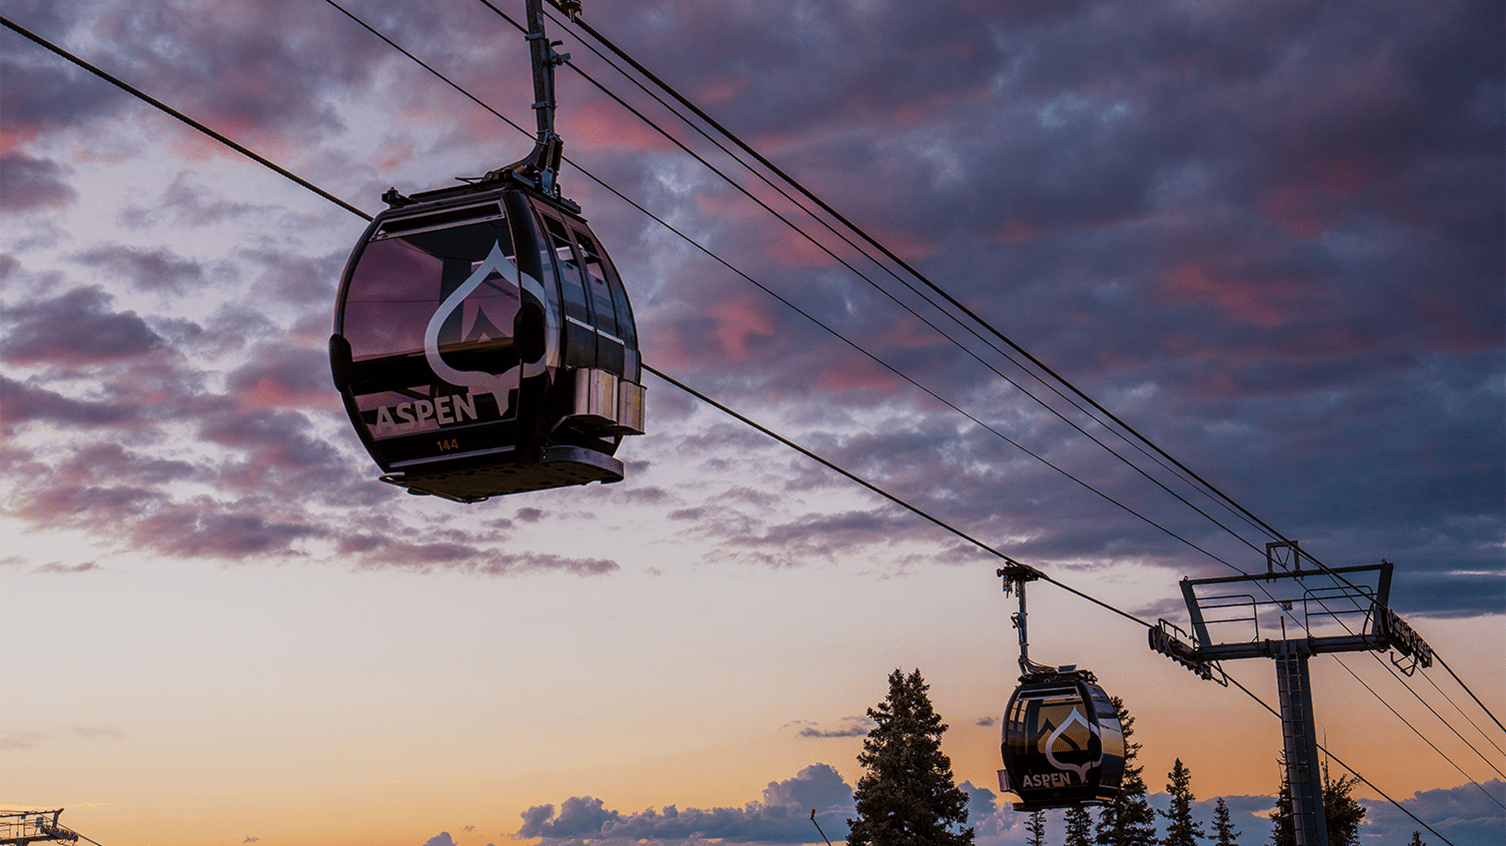 Silver Queen Gondola beneath a beautiful purple sunset at Aspen Mountain